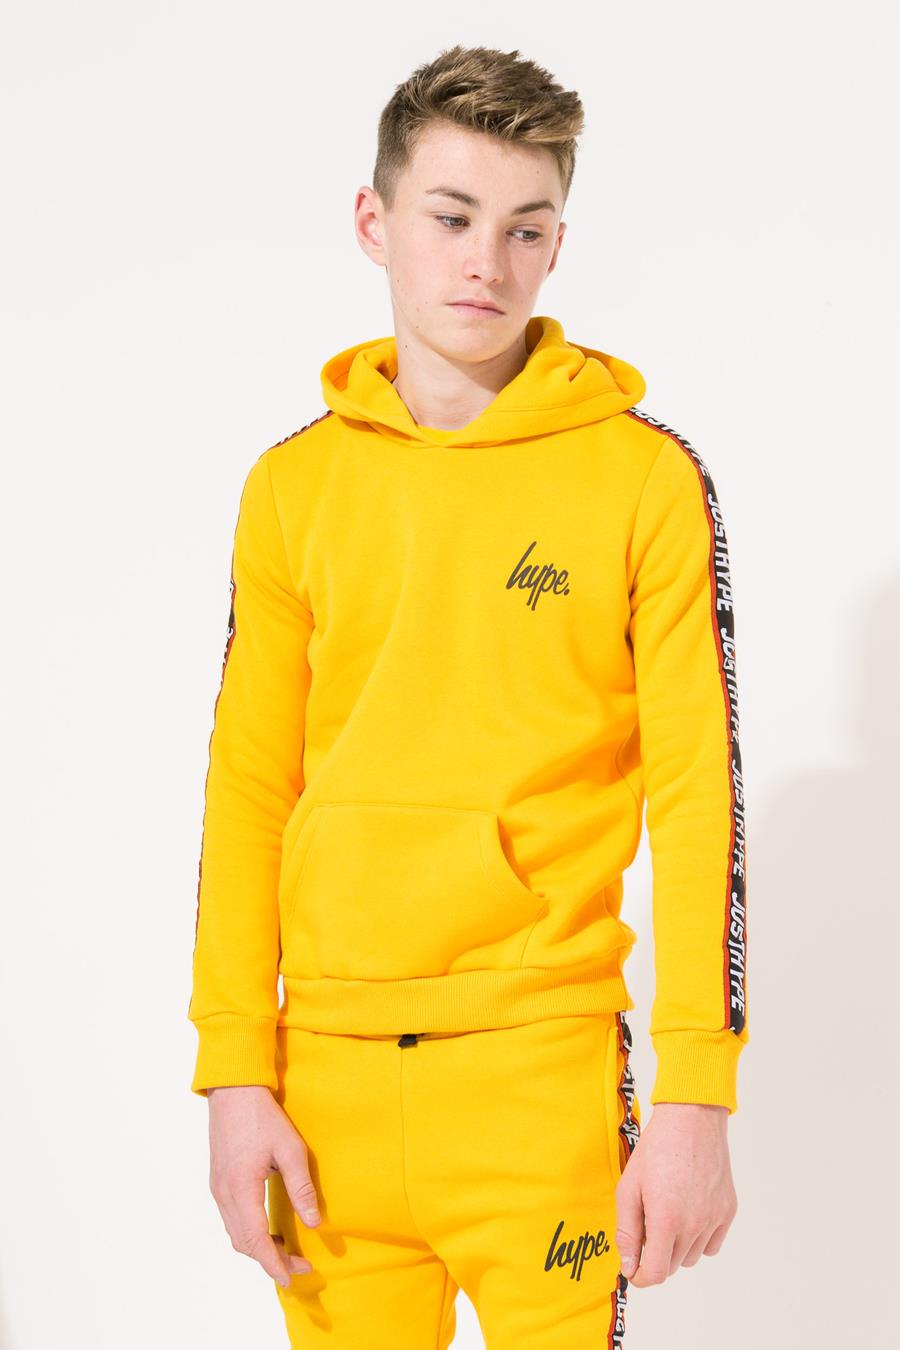 hype yellow hoodie